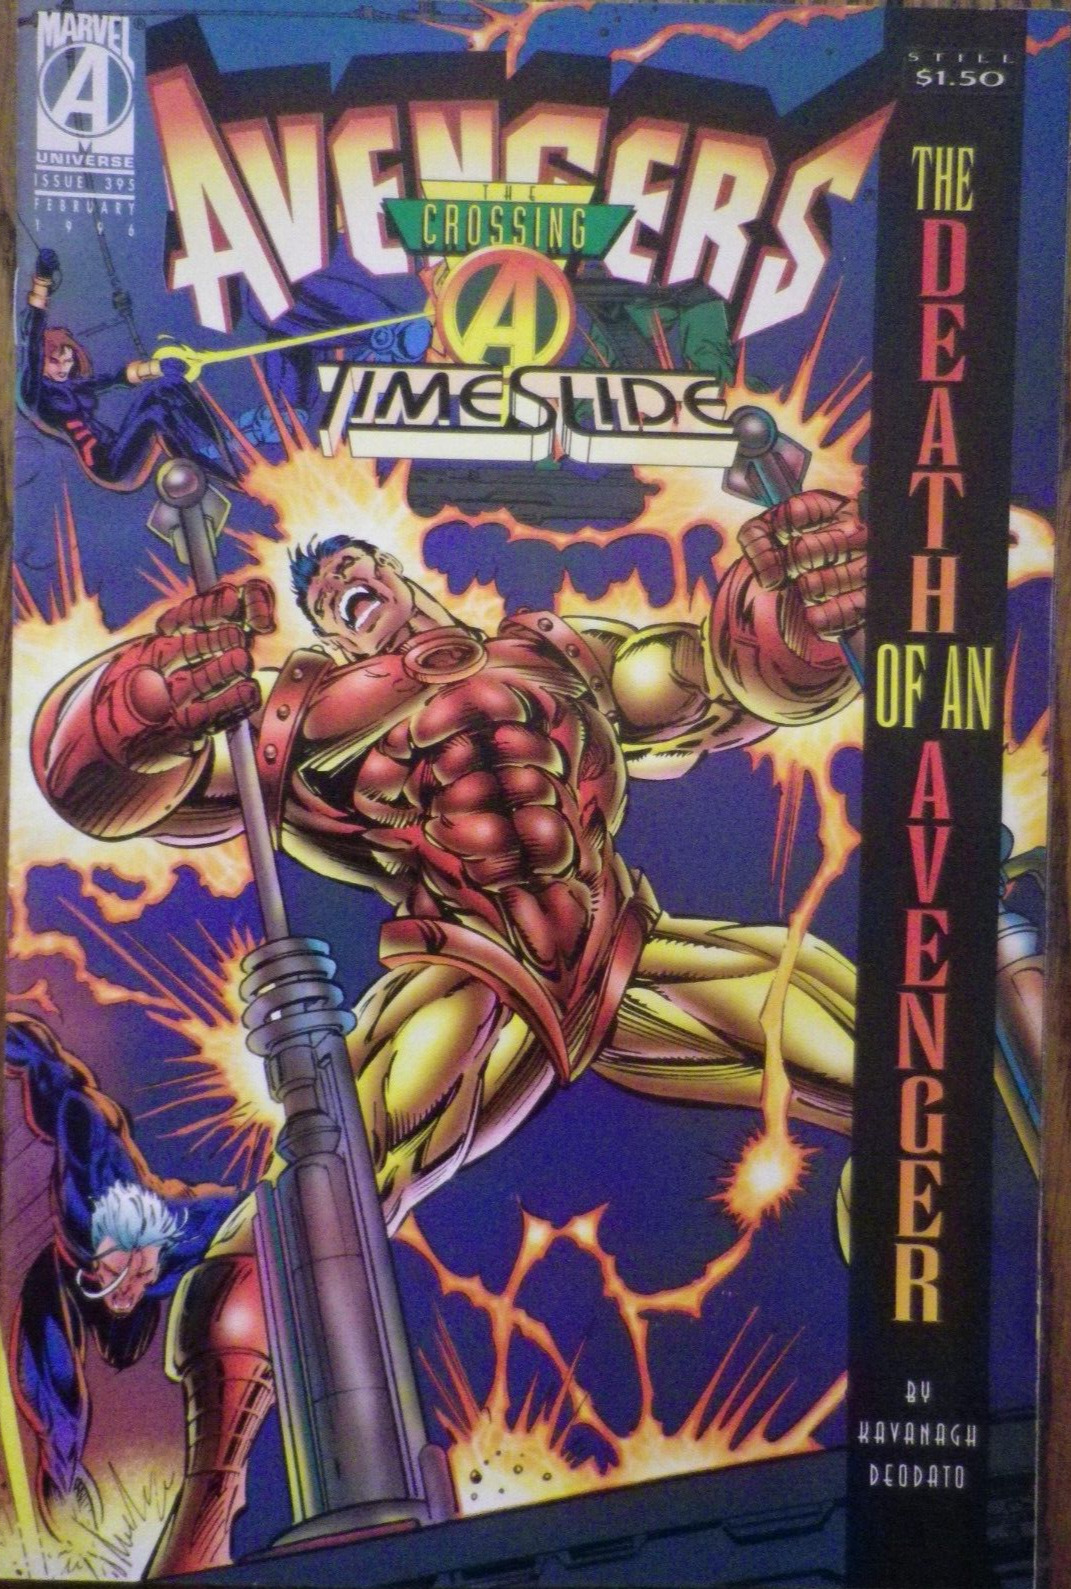 Avengers #395 - Feb 1996 - Marvel Comics - VERY NICE Look